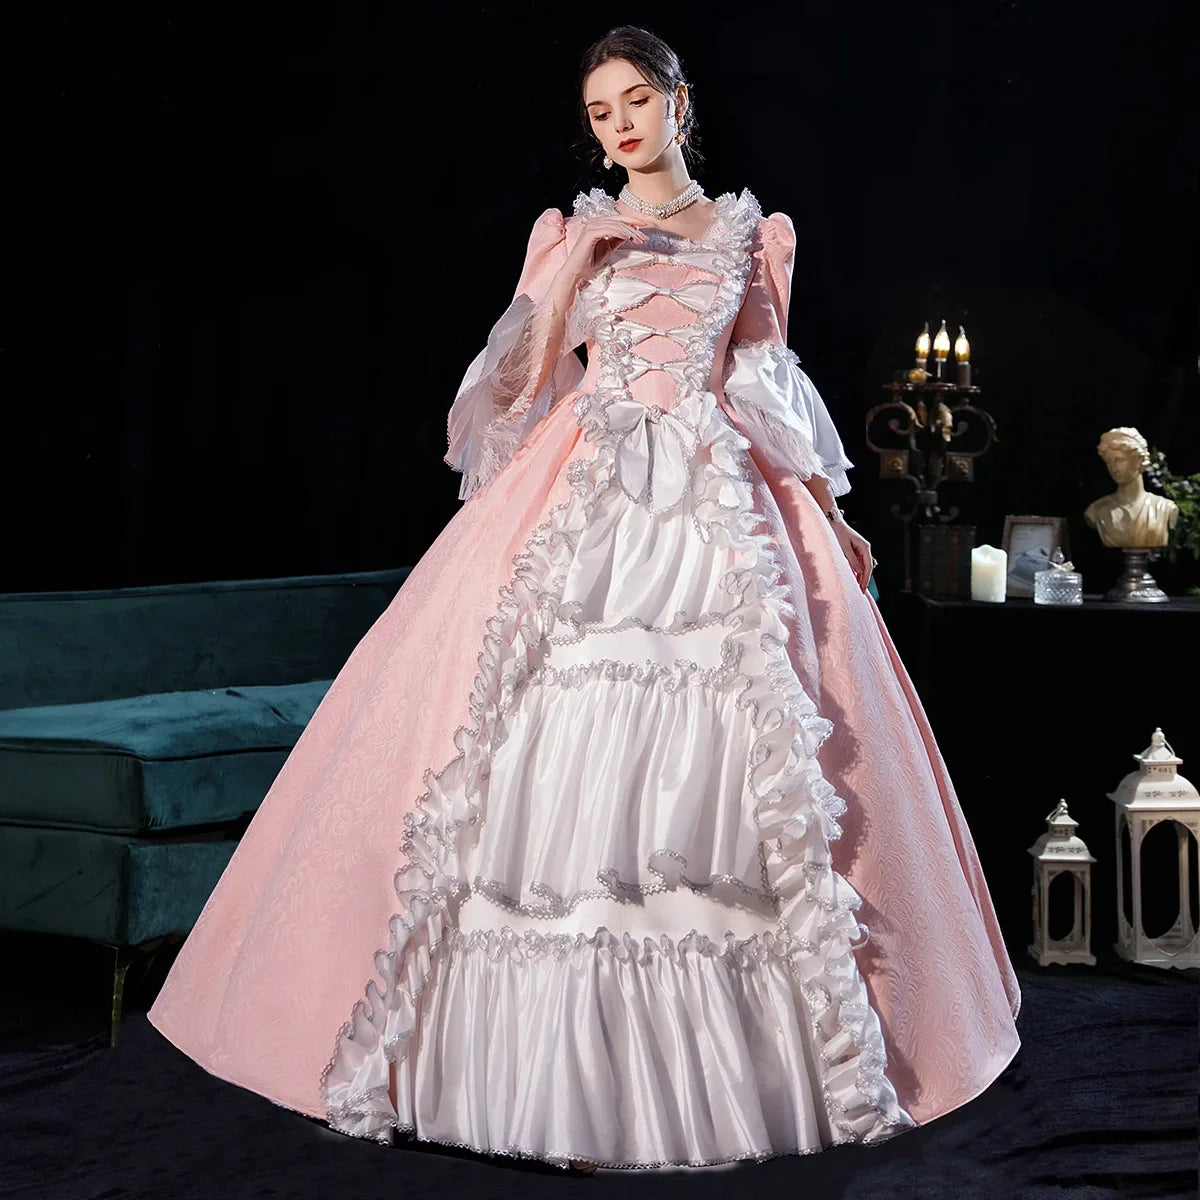 Romantic Pink Noble Princess Cinema Portrait Banquet Makeup Ball Drama Performance British Gown Dress